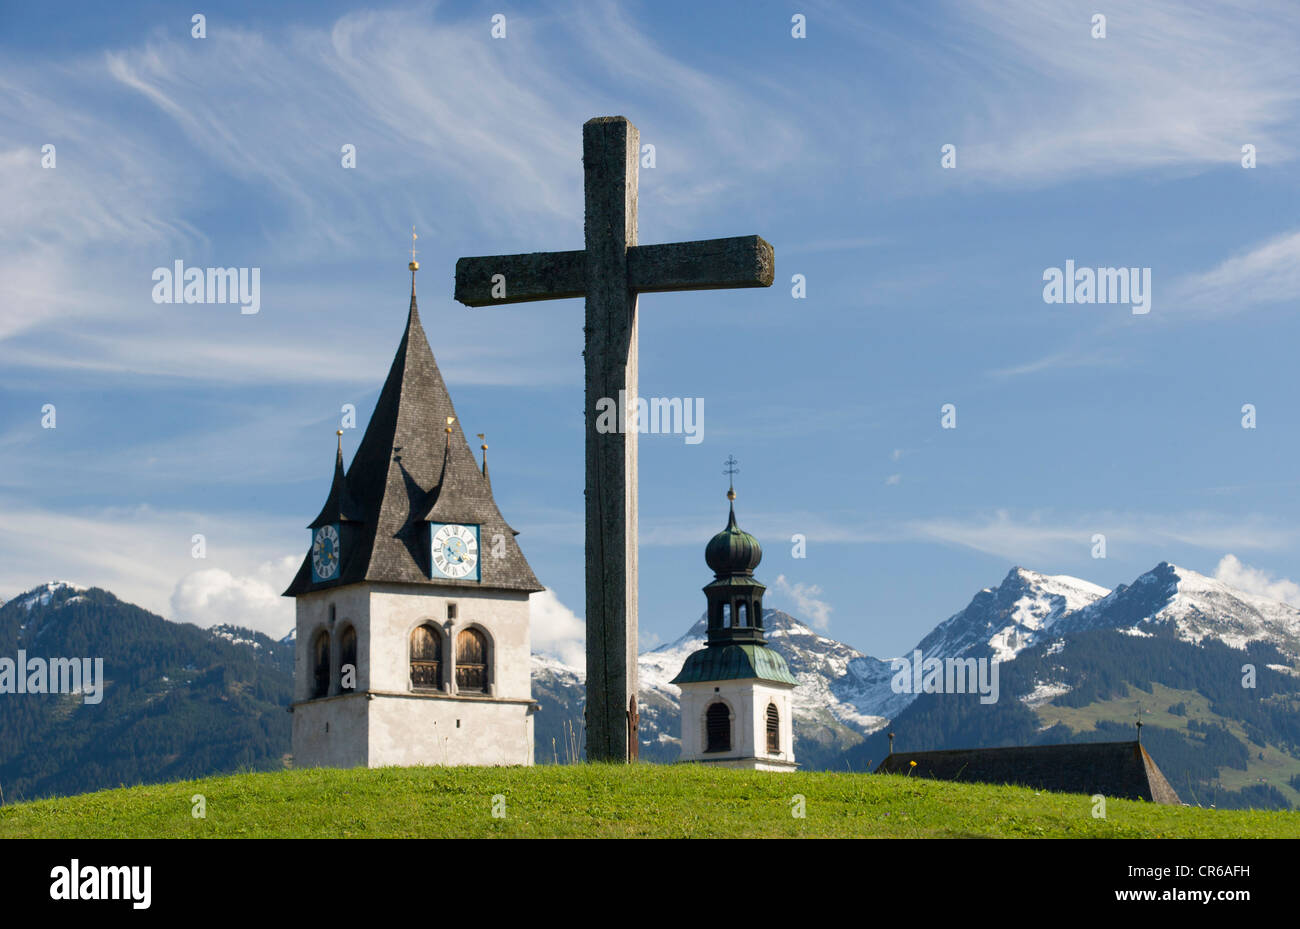 Austria, Tyrol,Kitzbuehel, View of Parish church Stock Photo